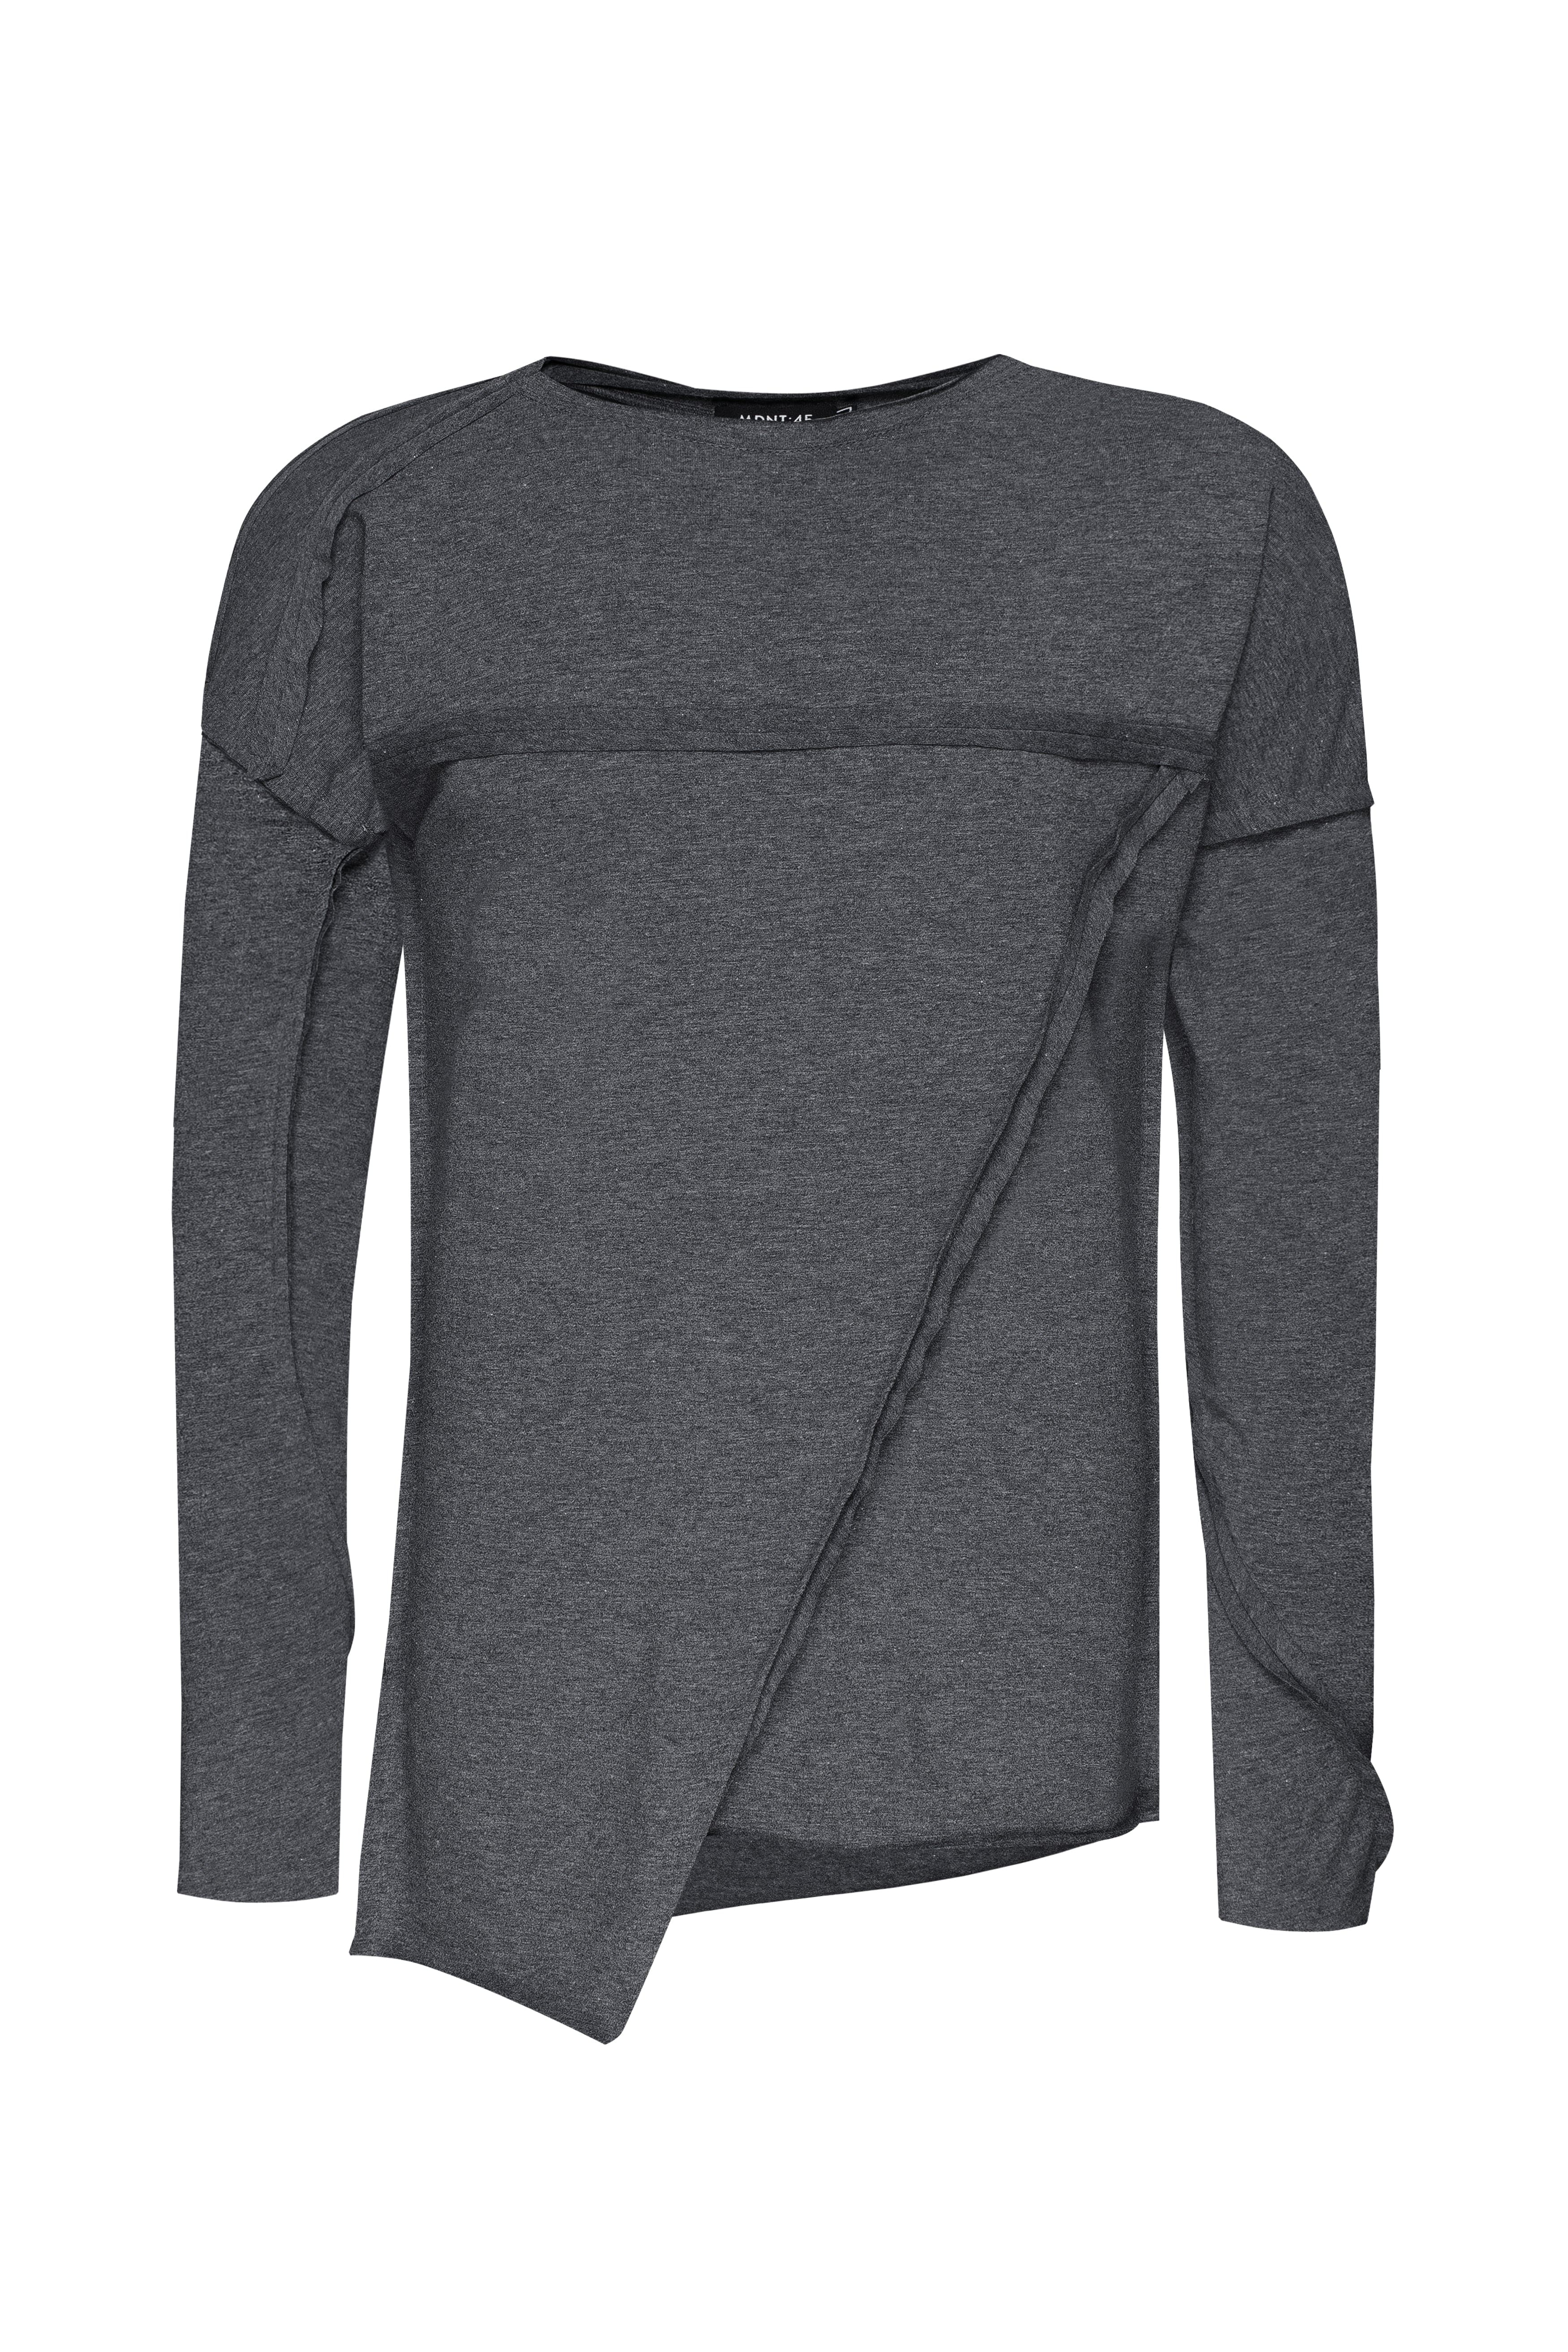 MDNT45 Tops & T-shirts Grey loose lightweight shirt